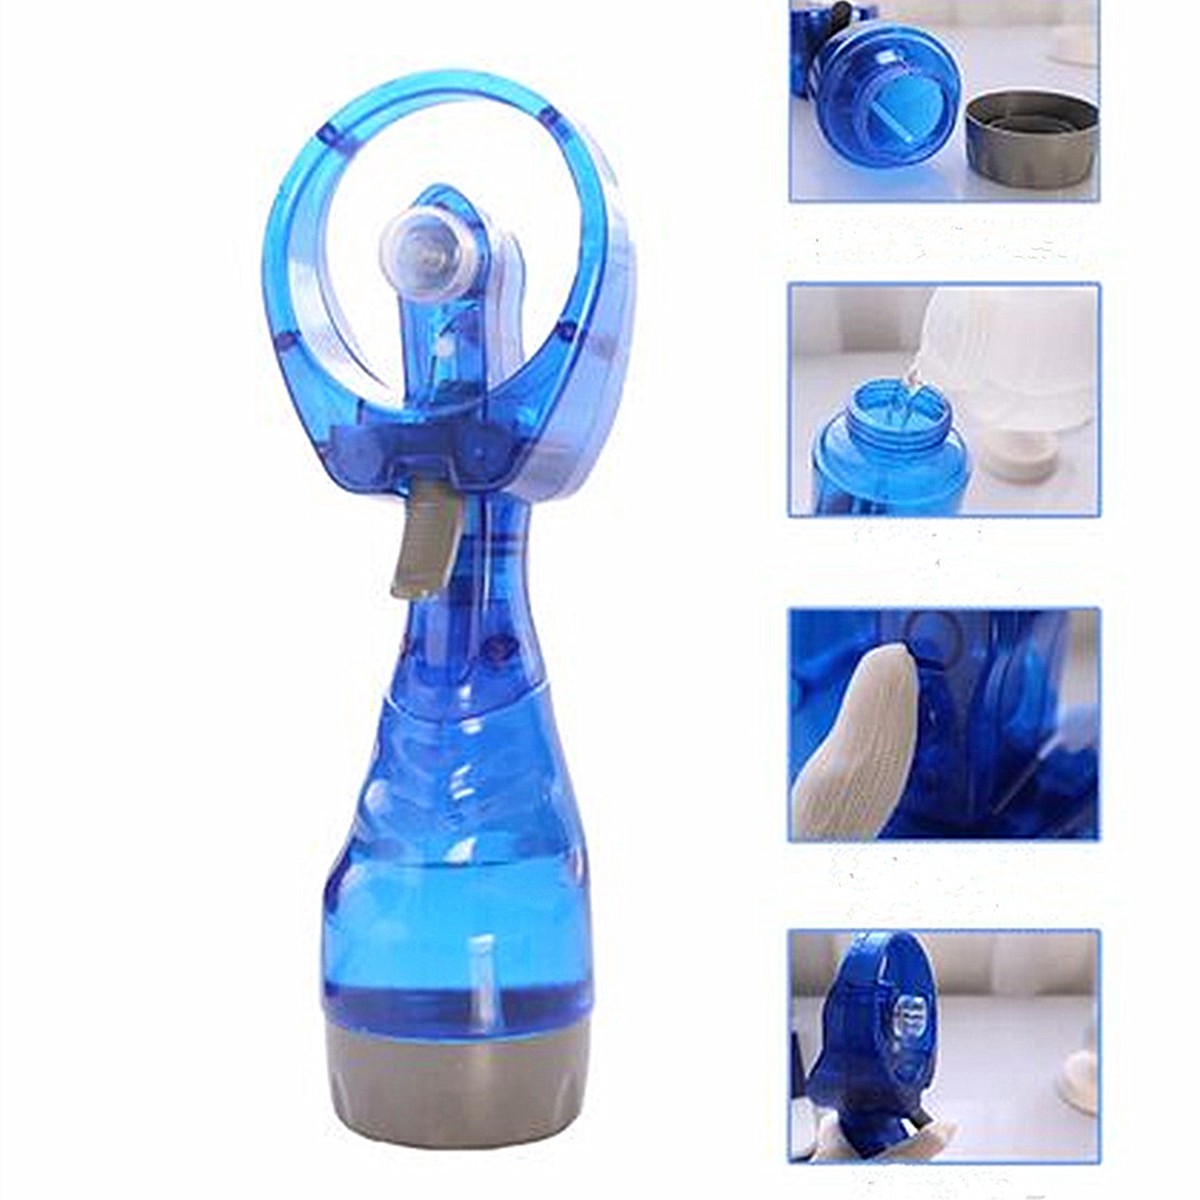 Portable-Mini-Hand-Held-Spray-Cooling-Fan-Water-Mist-Sport-Beach-Travel-Gadget-1319758-6